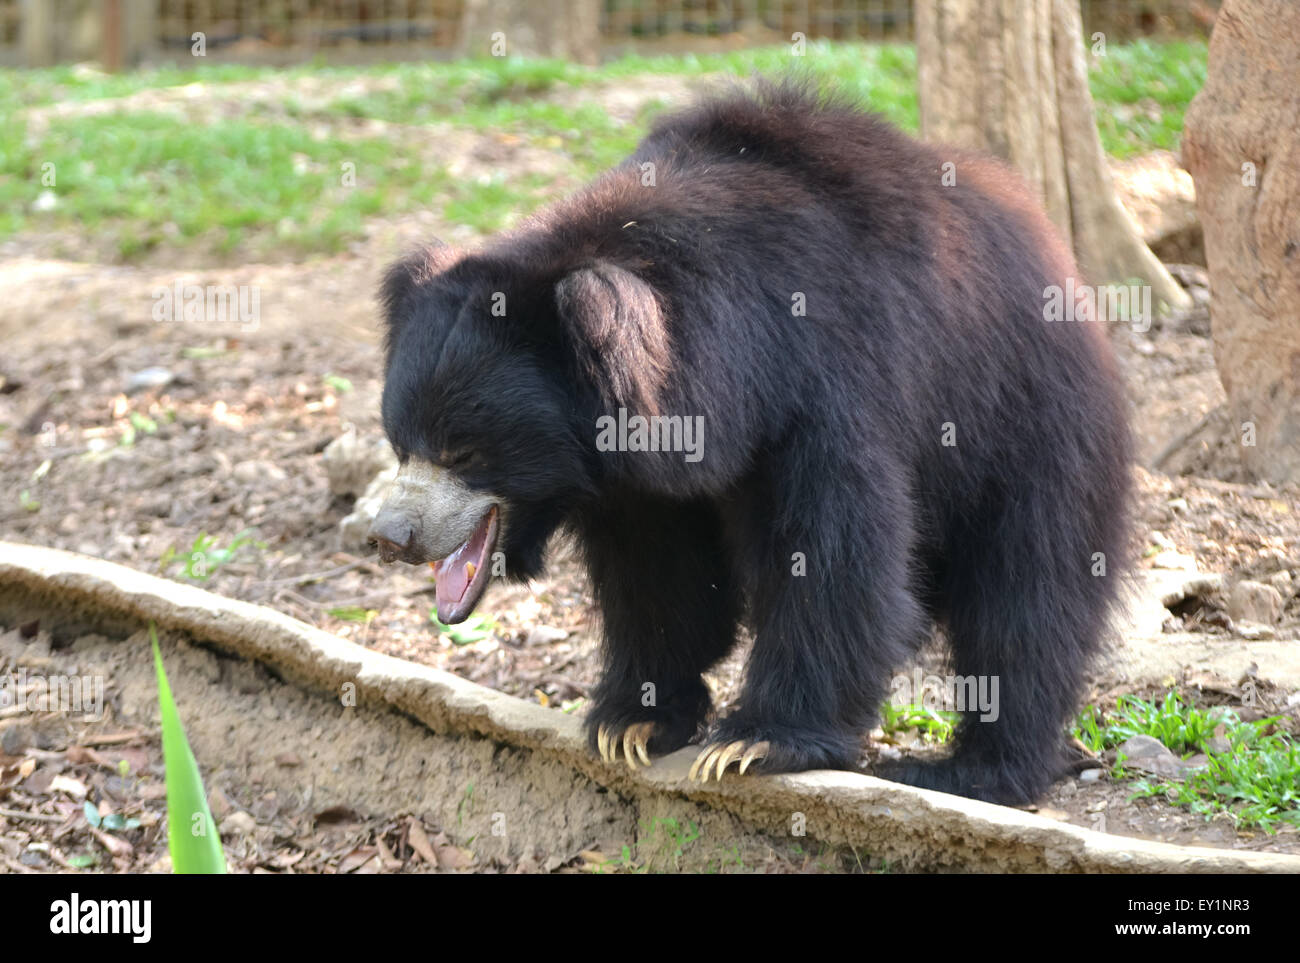 sloth bear or Melursus ursinus in zoo Stock Photo